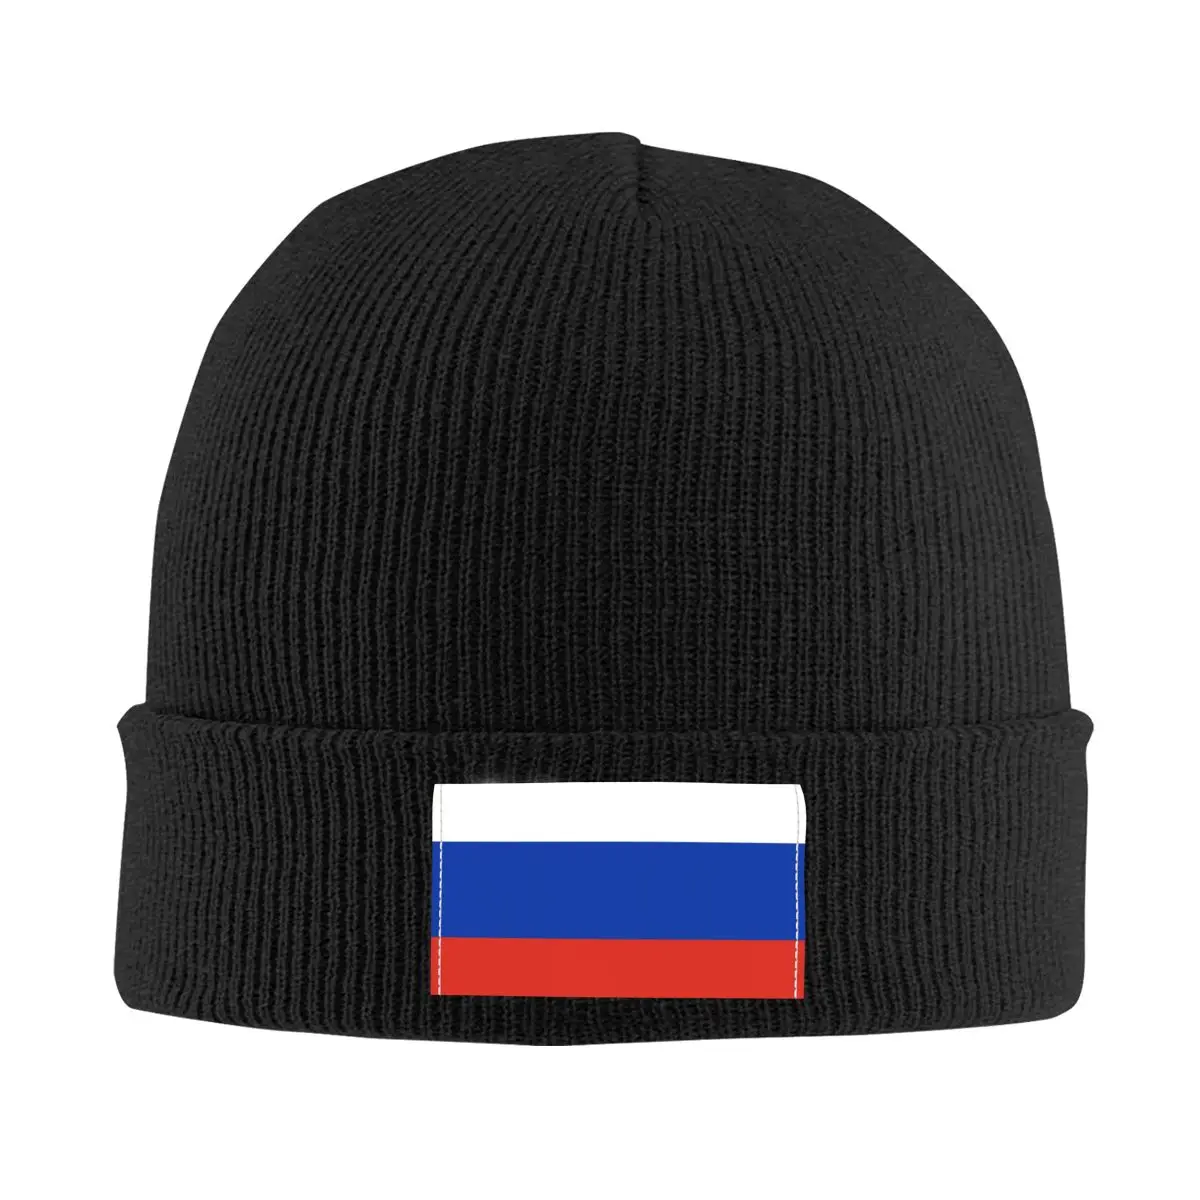 Flag Of Russia Skullies Beanies Caps Unisex Winter Warm Knitted Hat Men Women Fashion Adult Bonnet Hats Outdoor Ski Cap 1